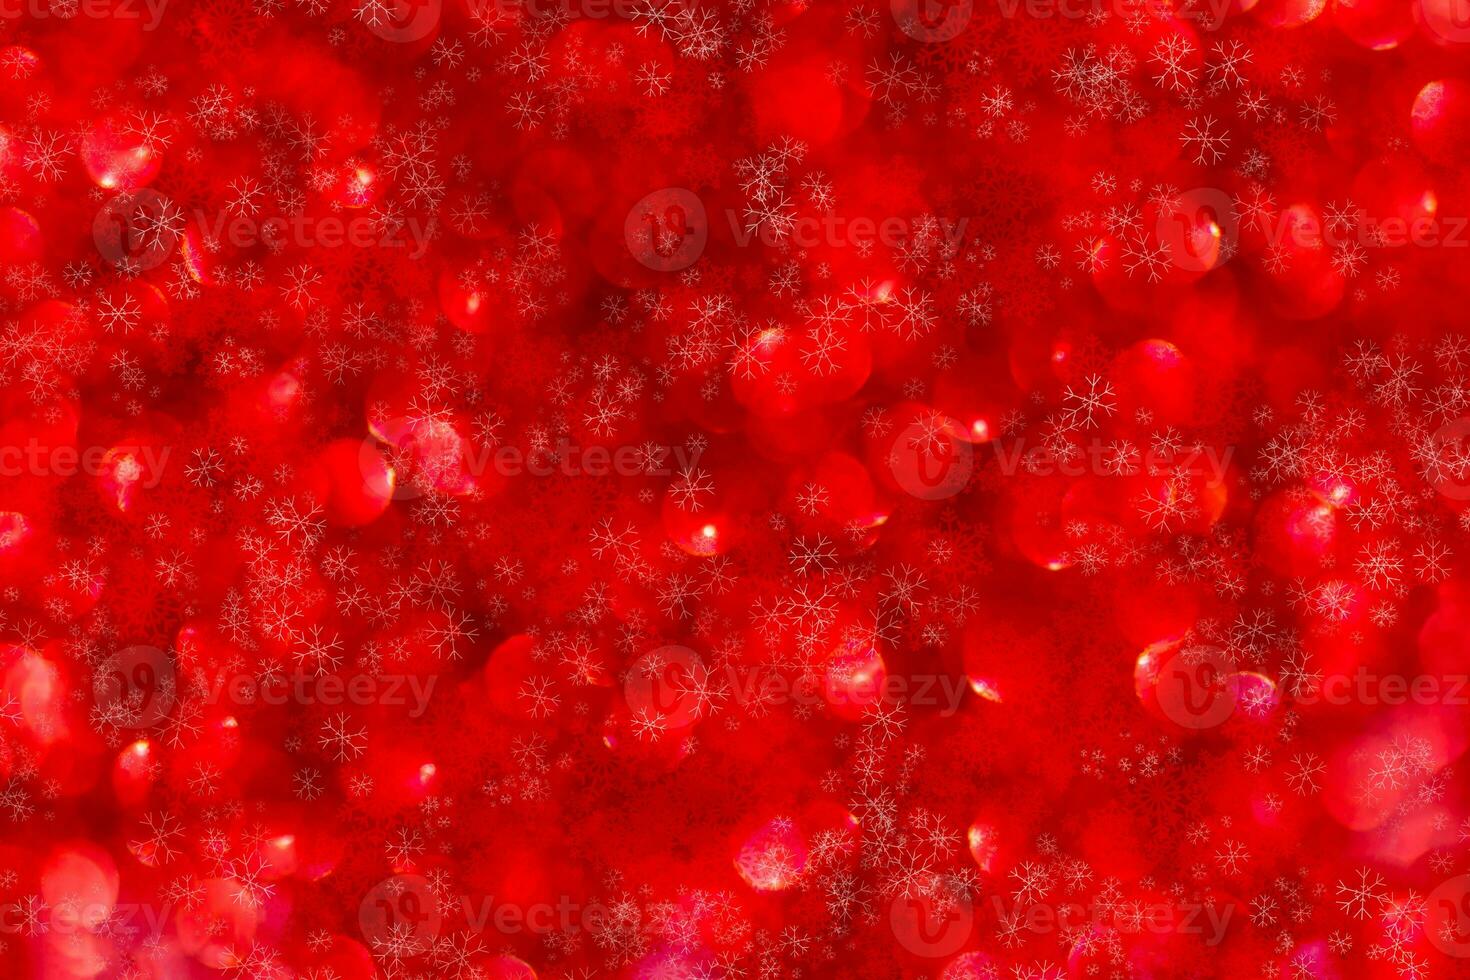 Red Sparkling Glitter bokeh Background. photo